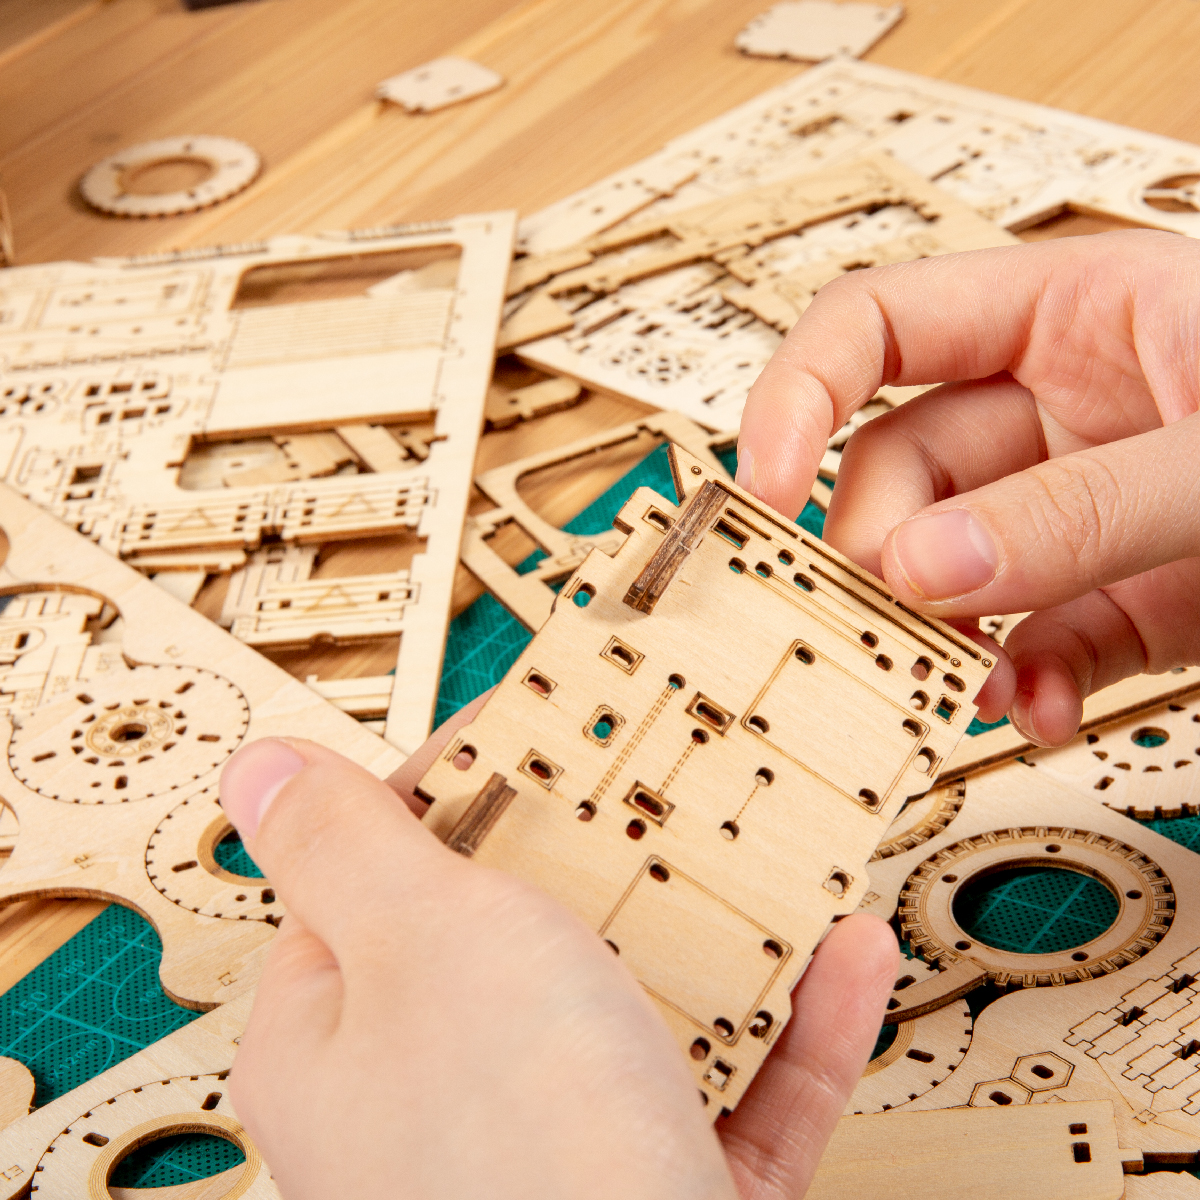 ROKR3Dパズル回転可能な3Dグローブレーザー切断木造建築玩具キット